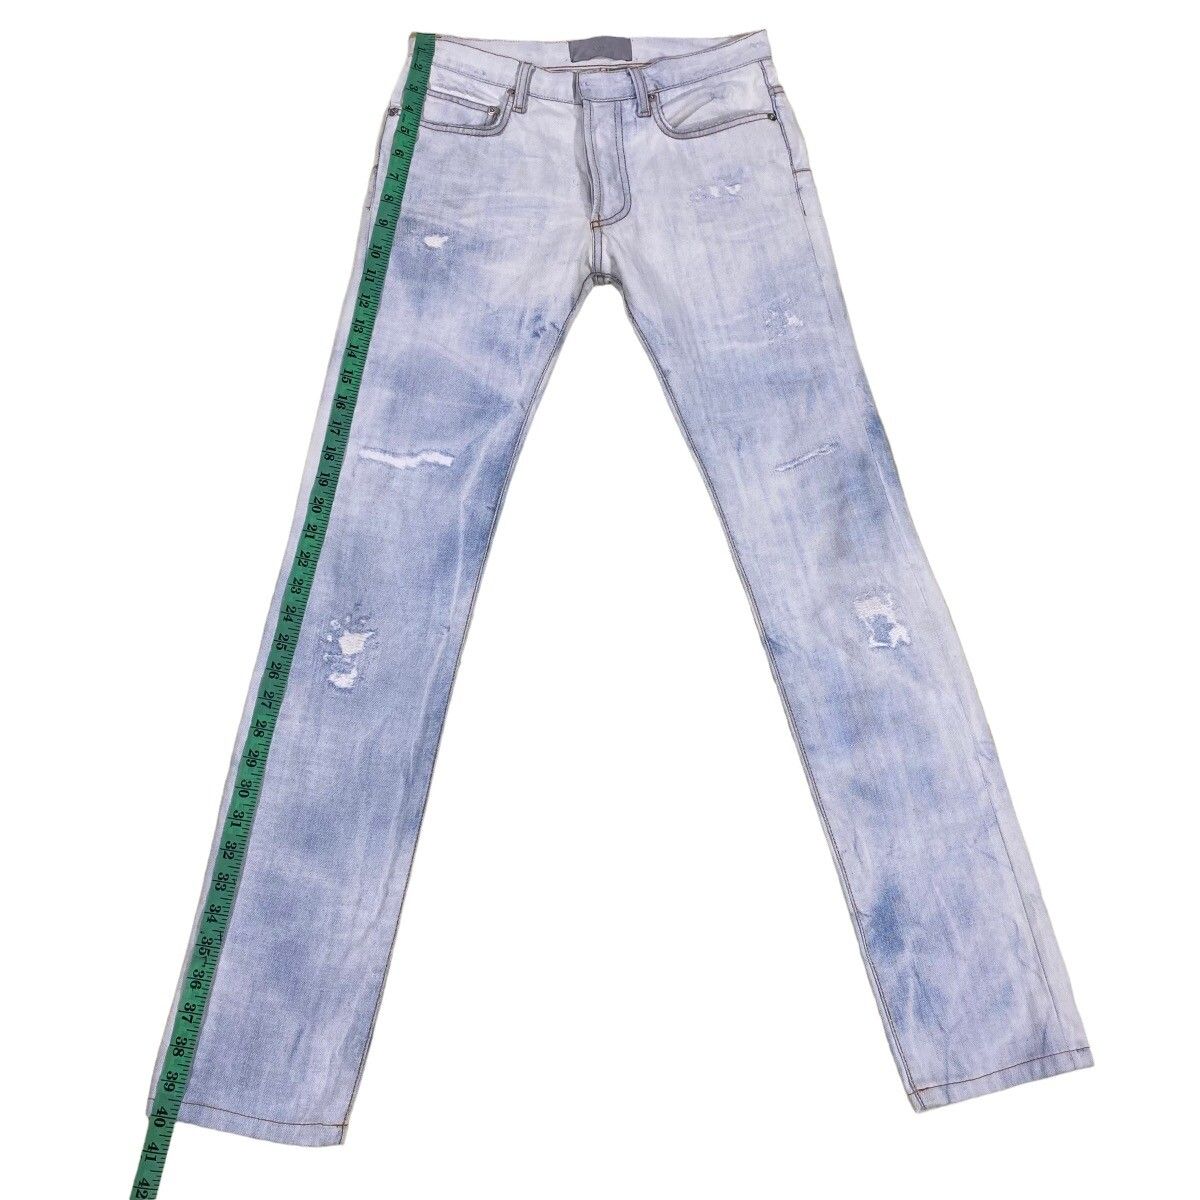 Dior Homme SS06 Dirty Snow Denim Jeans - 24